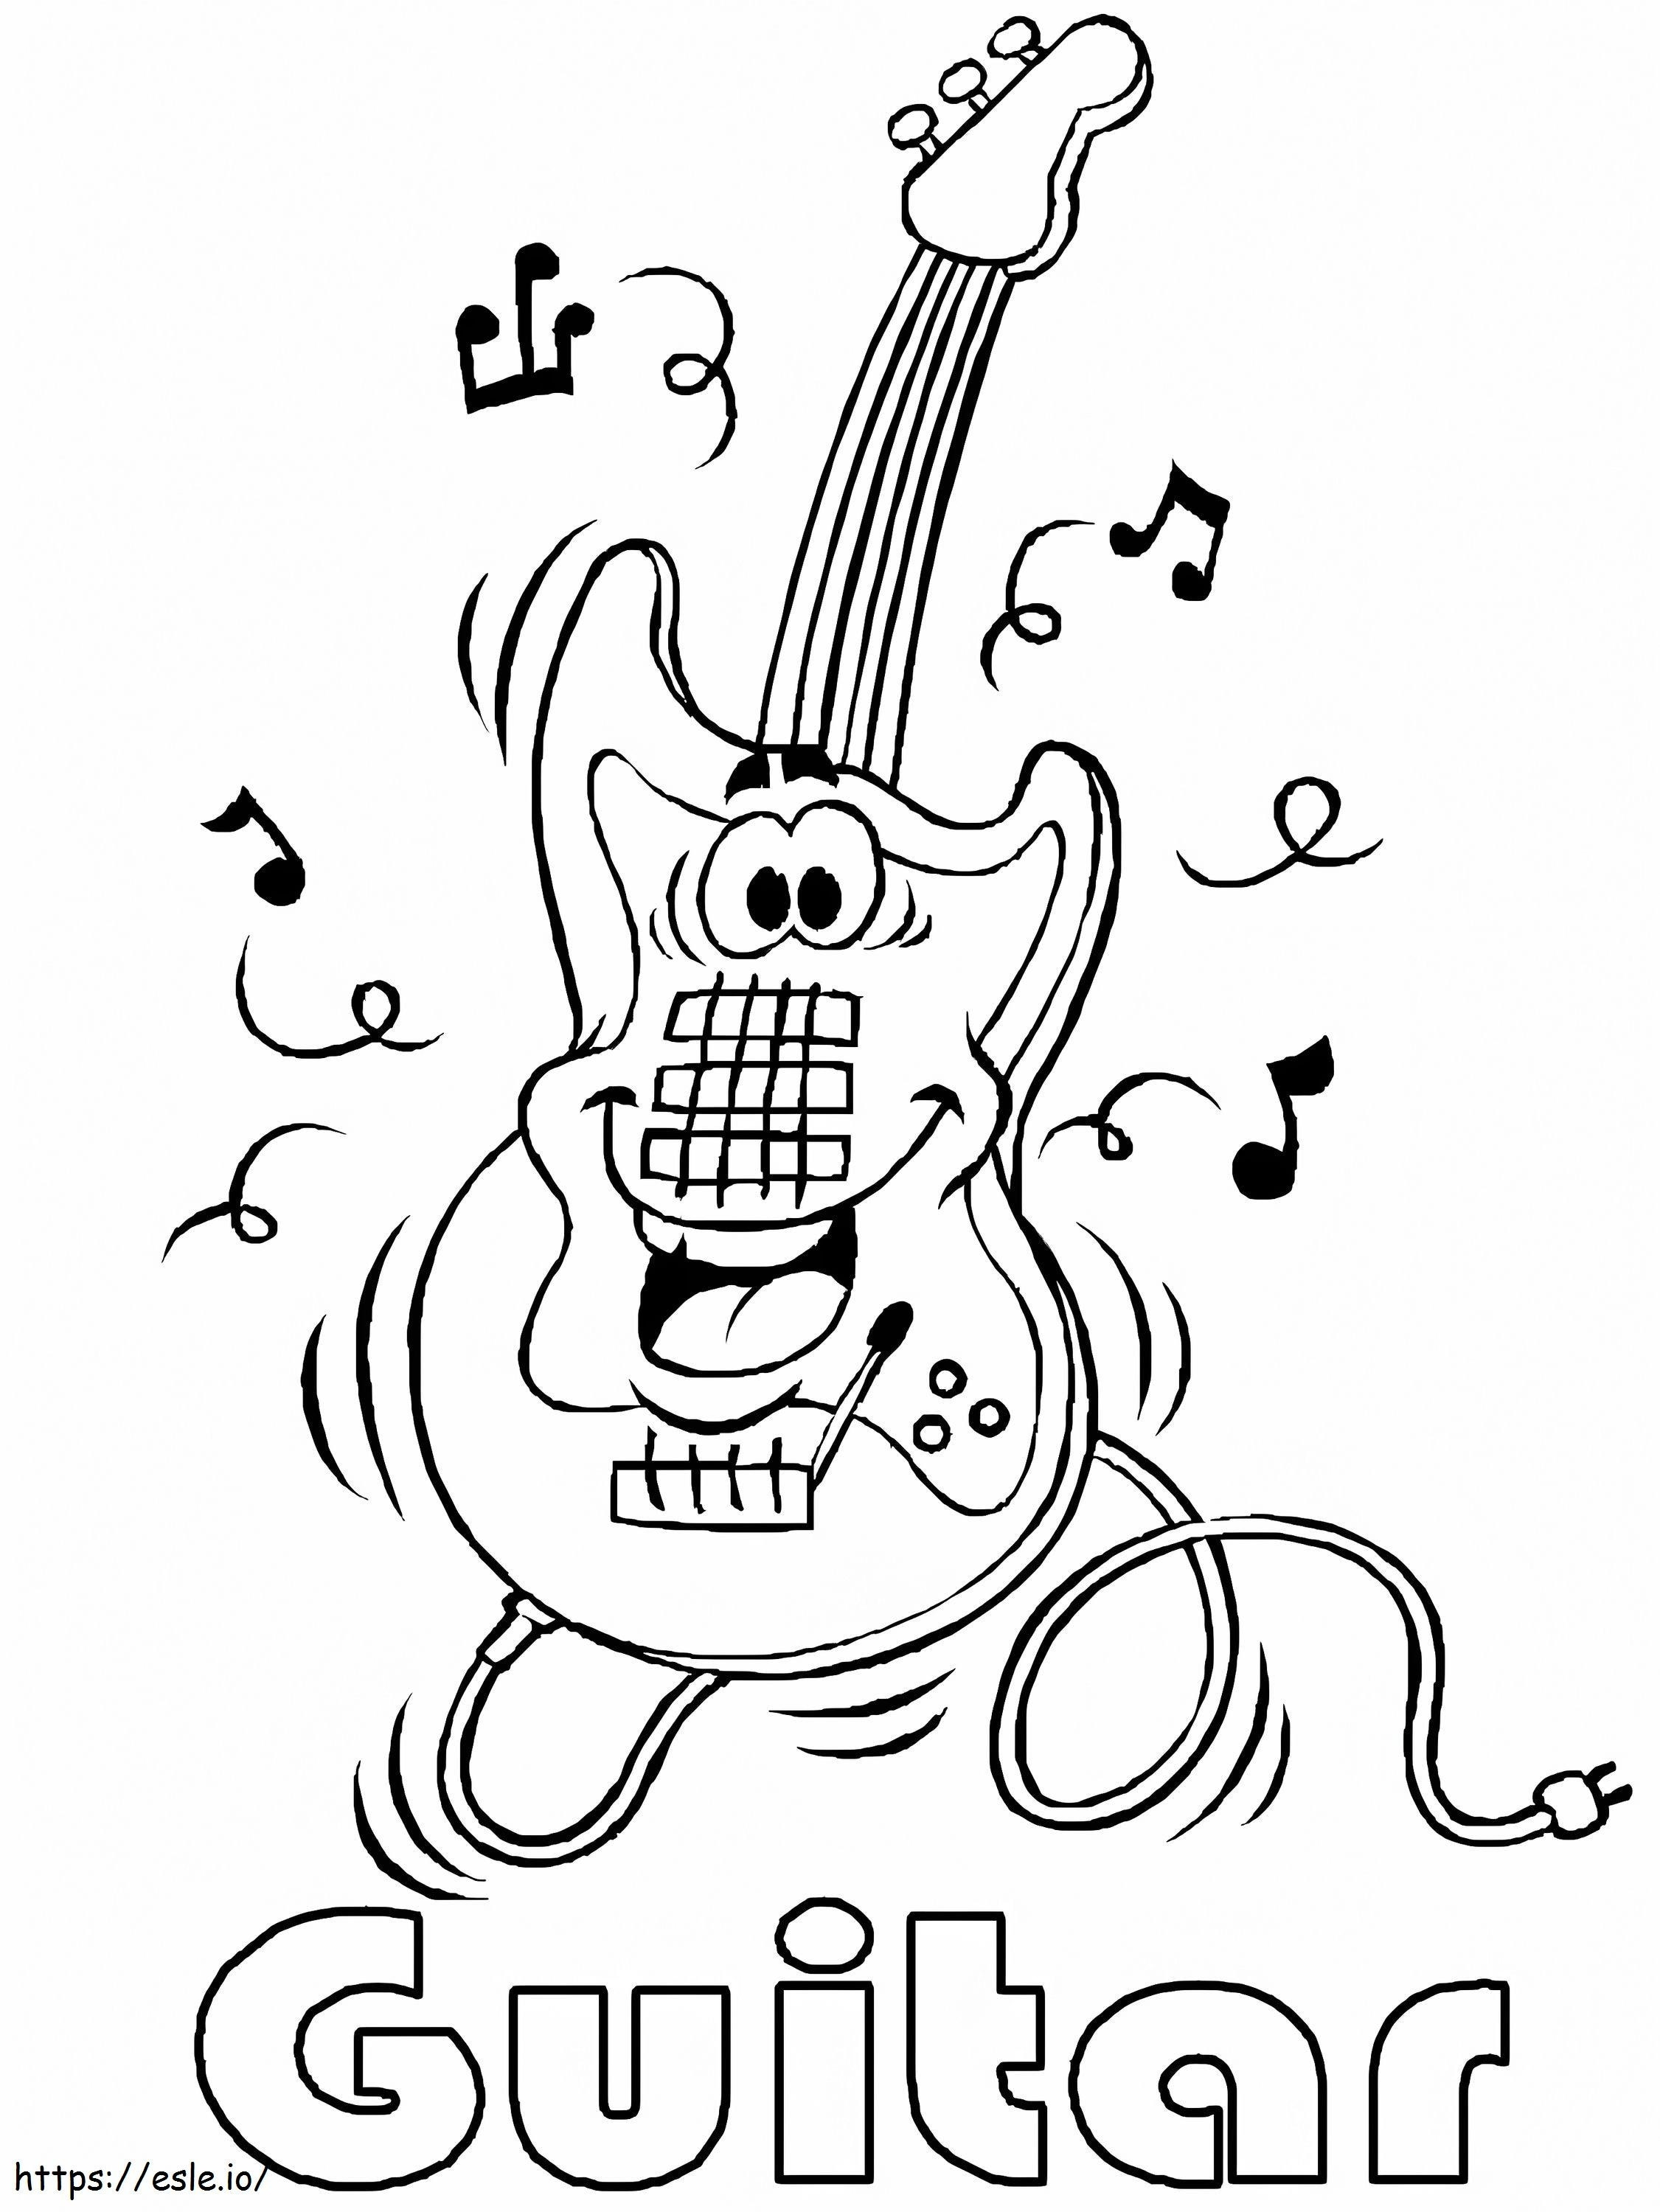 Cartoon Guitar coloring page